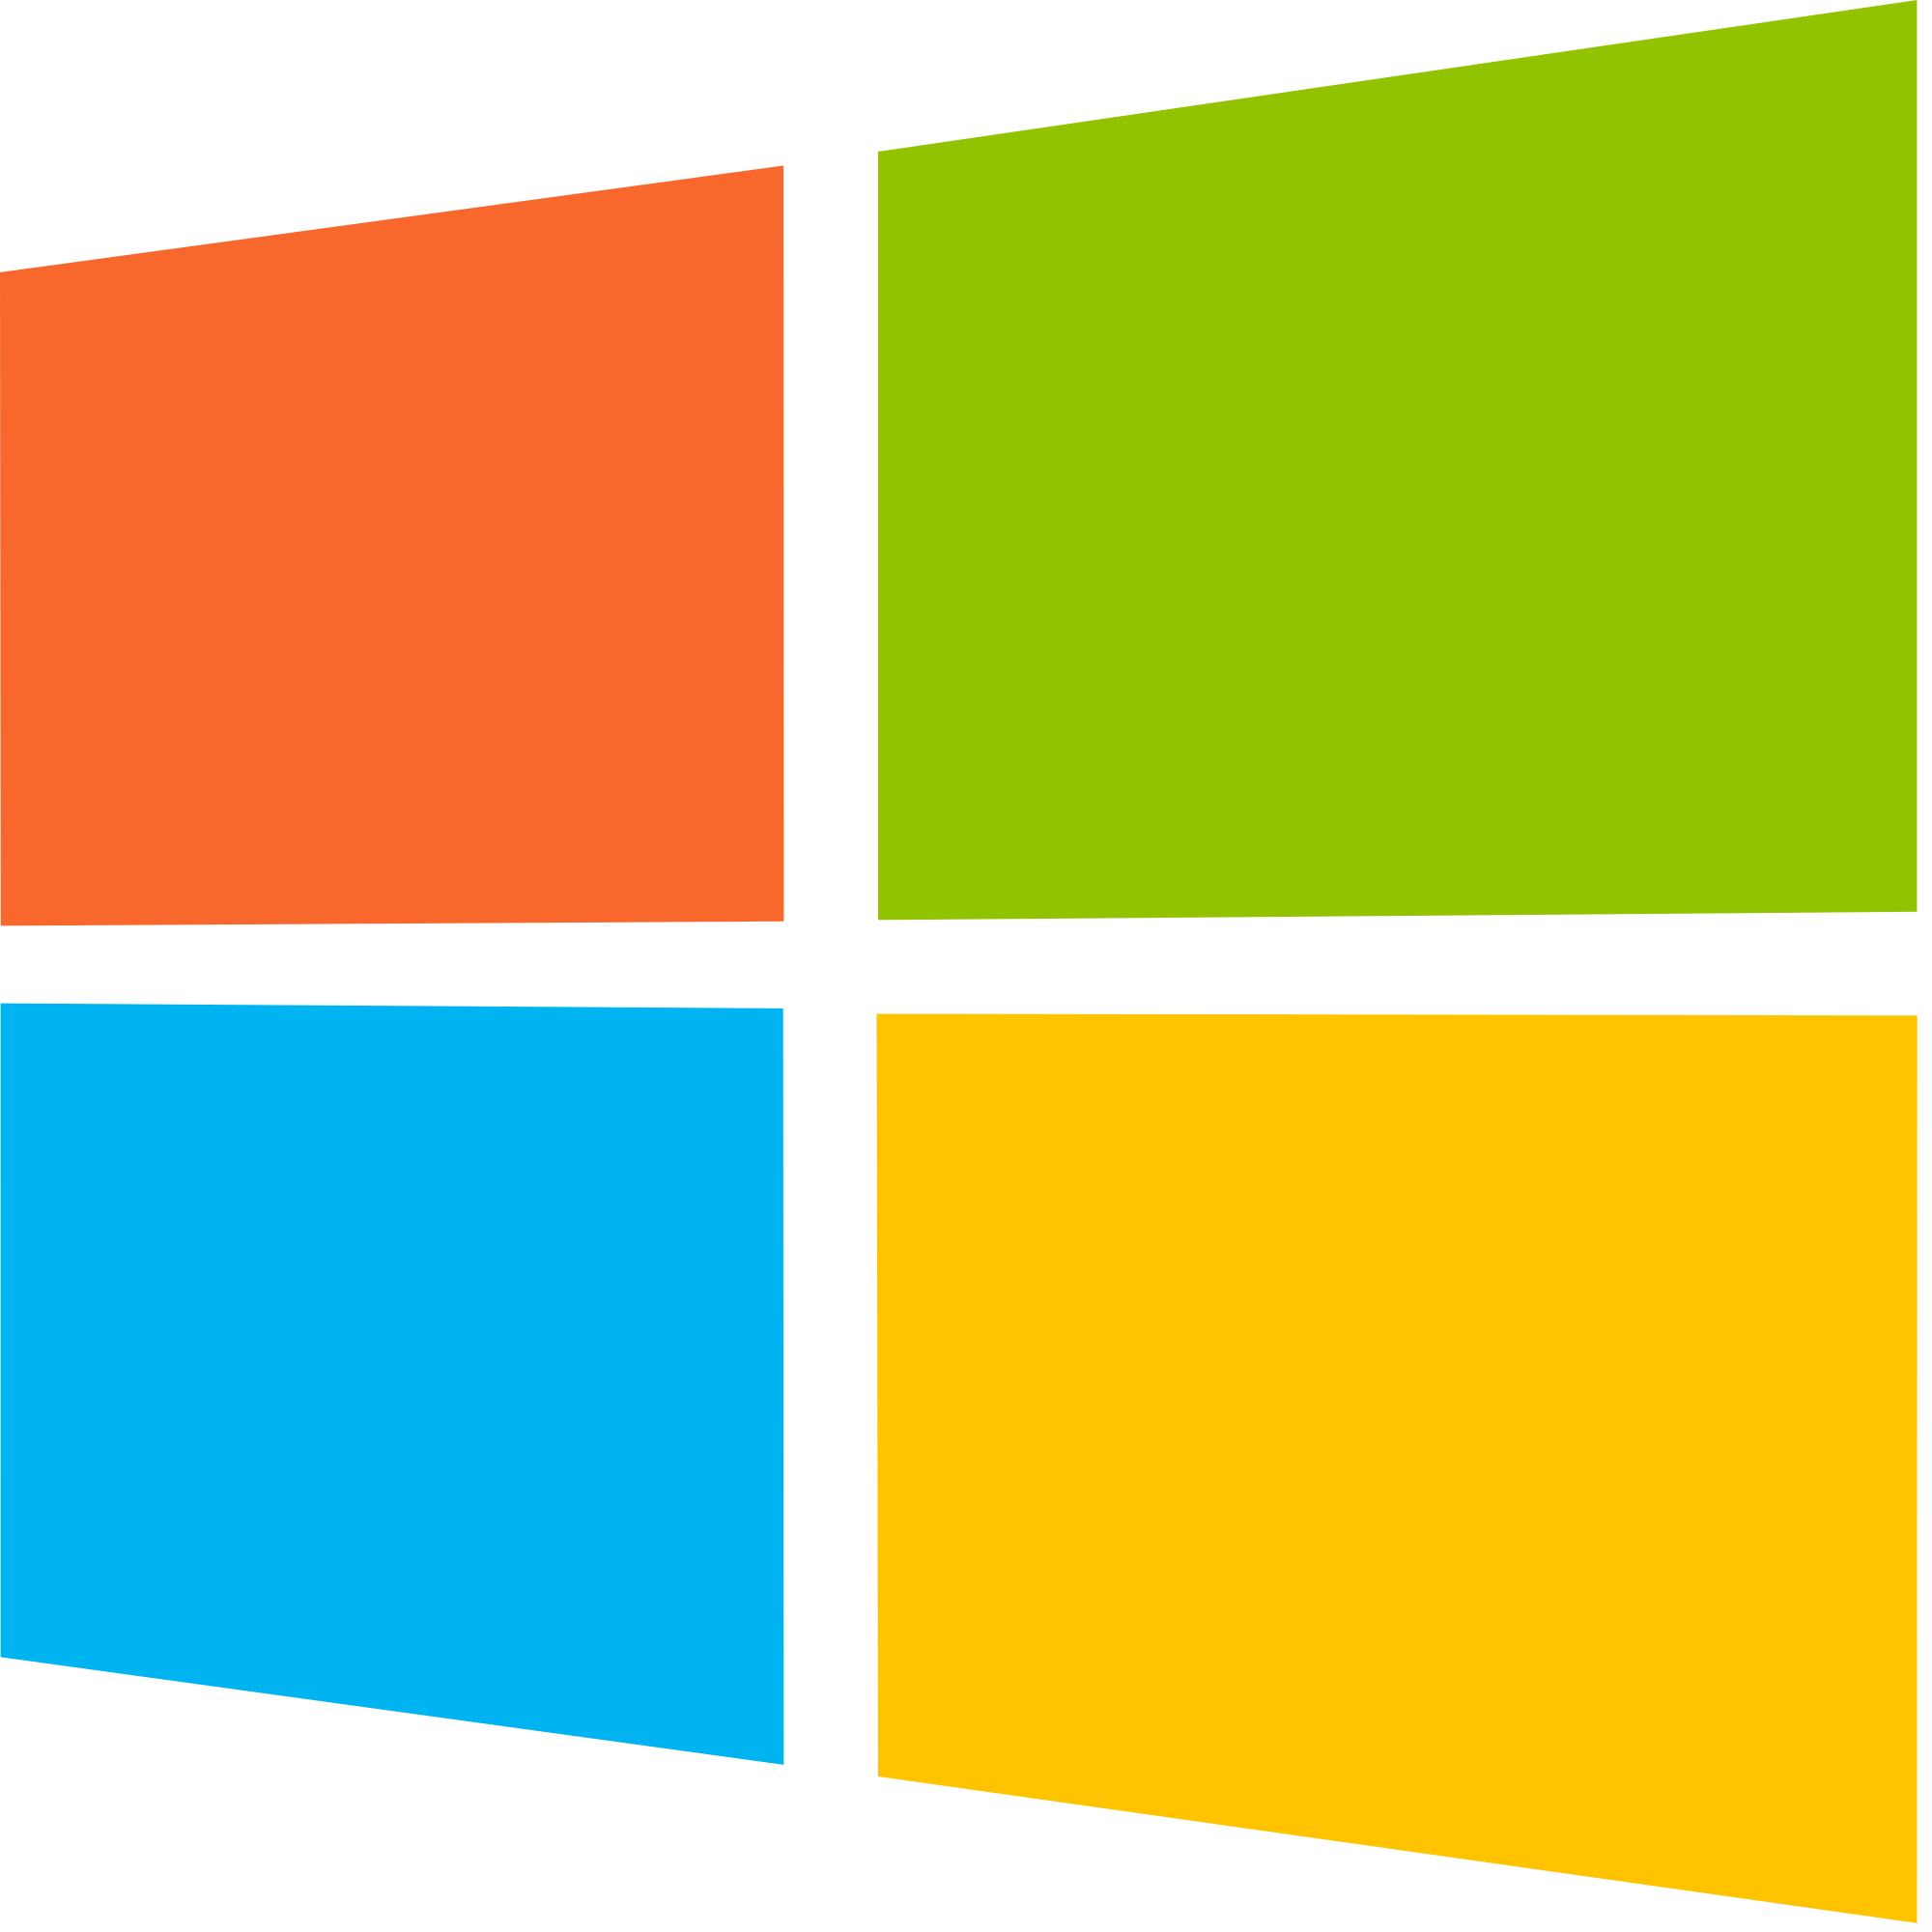 Windows Logo - File:Windows logo - 2012 derivative.svg - Wikimedia Commons